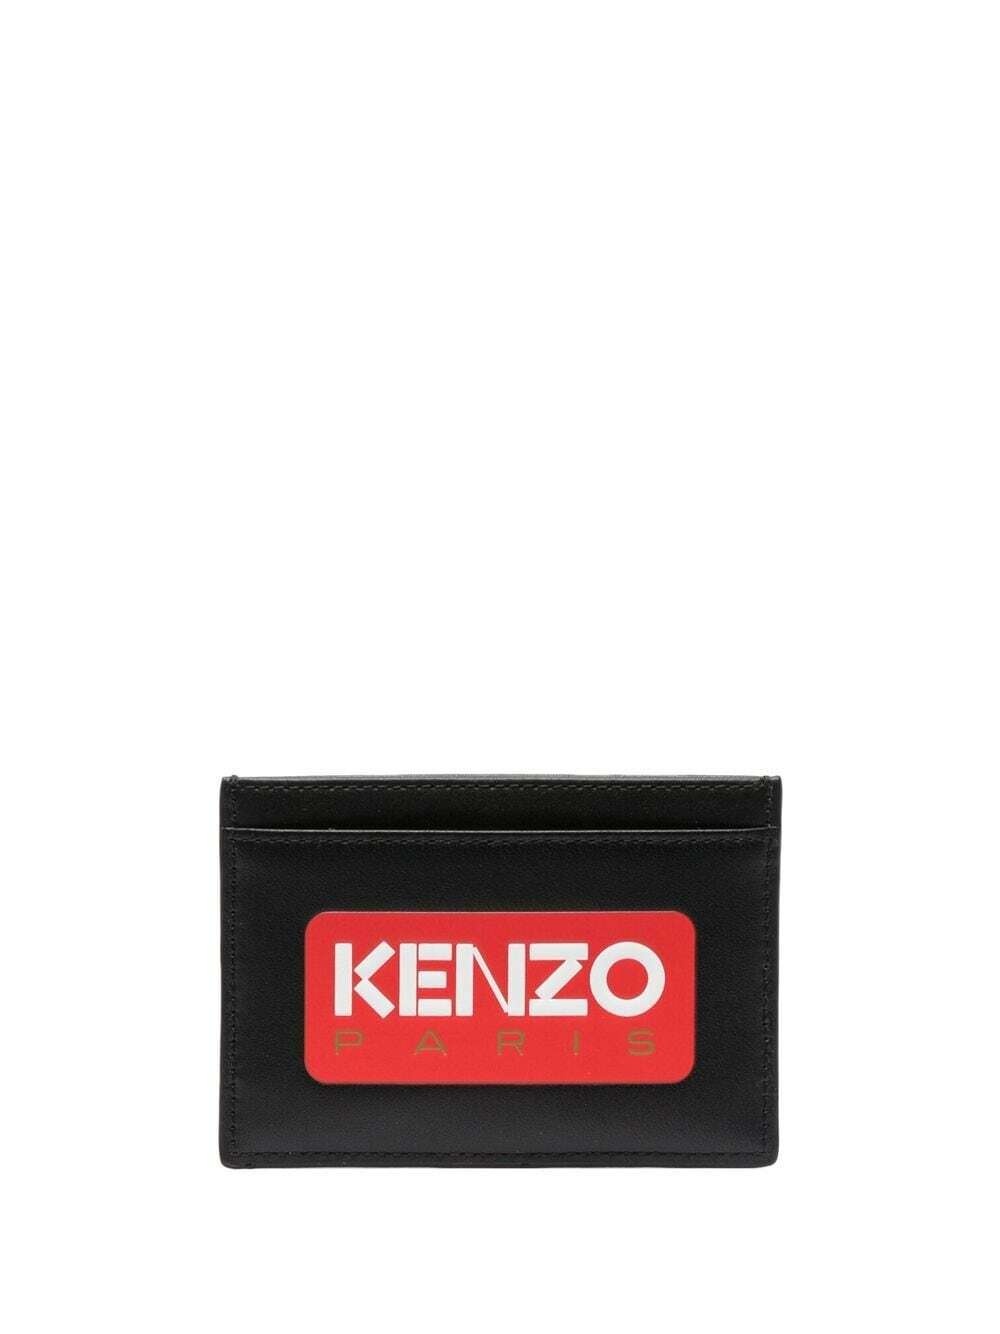 Photo: KENZO - Kenzo Paris Leather Credit Card Case